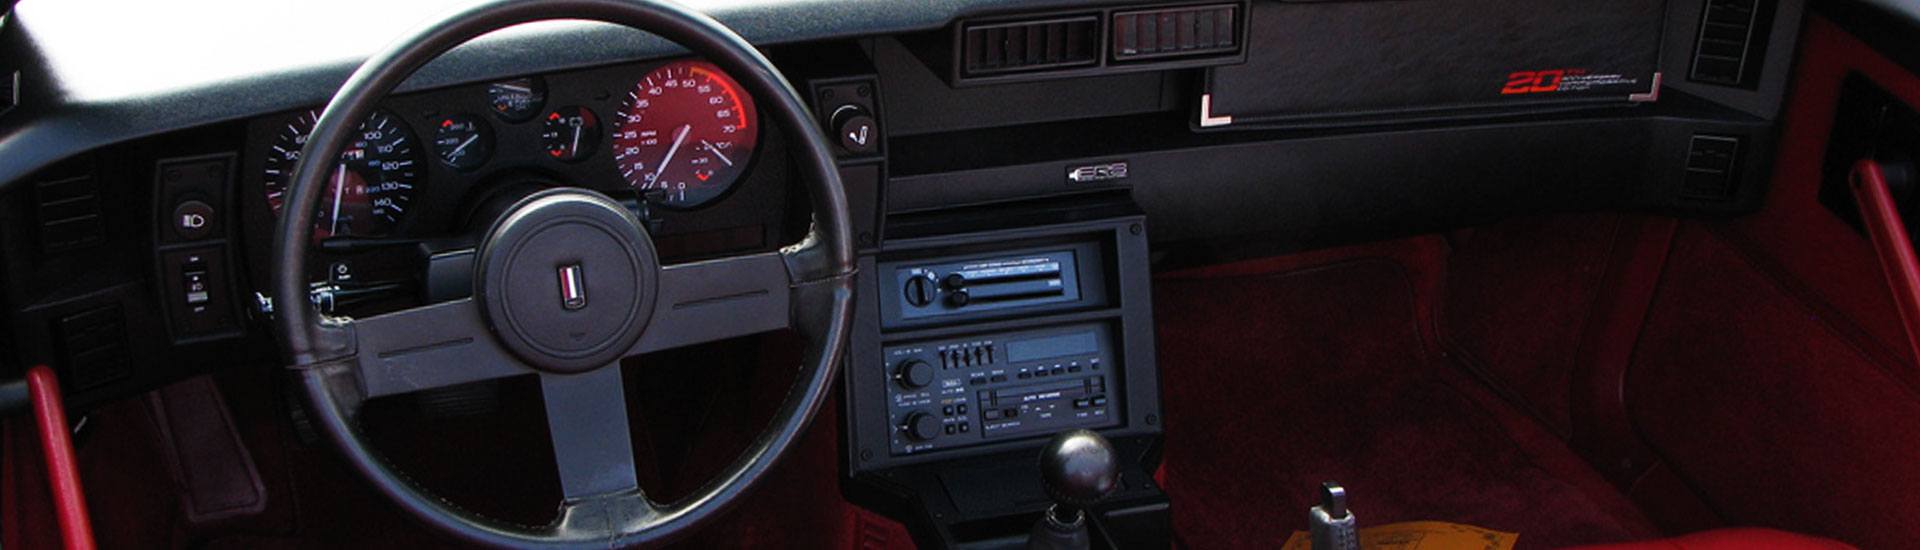 1987 Chevrolet Camaro Dash Kits